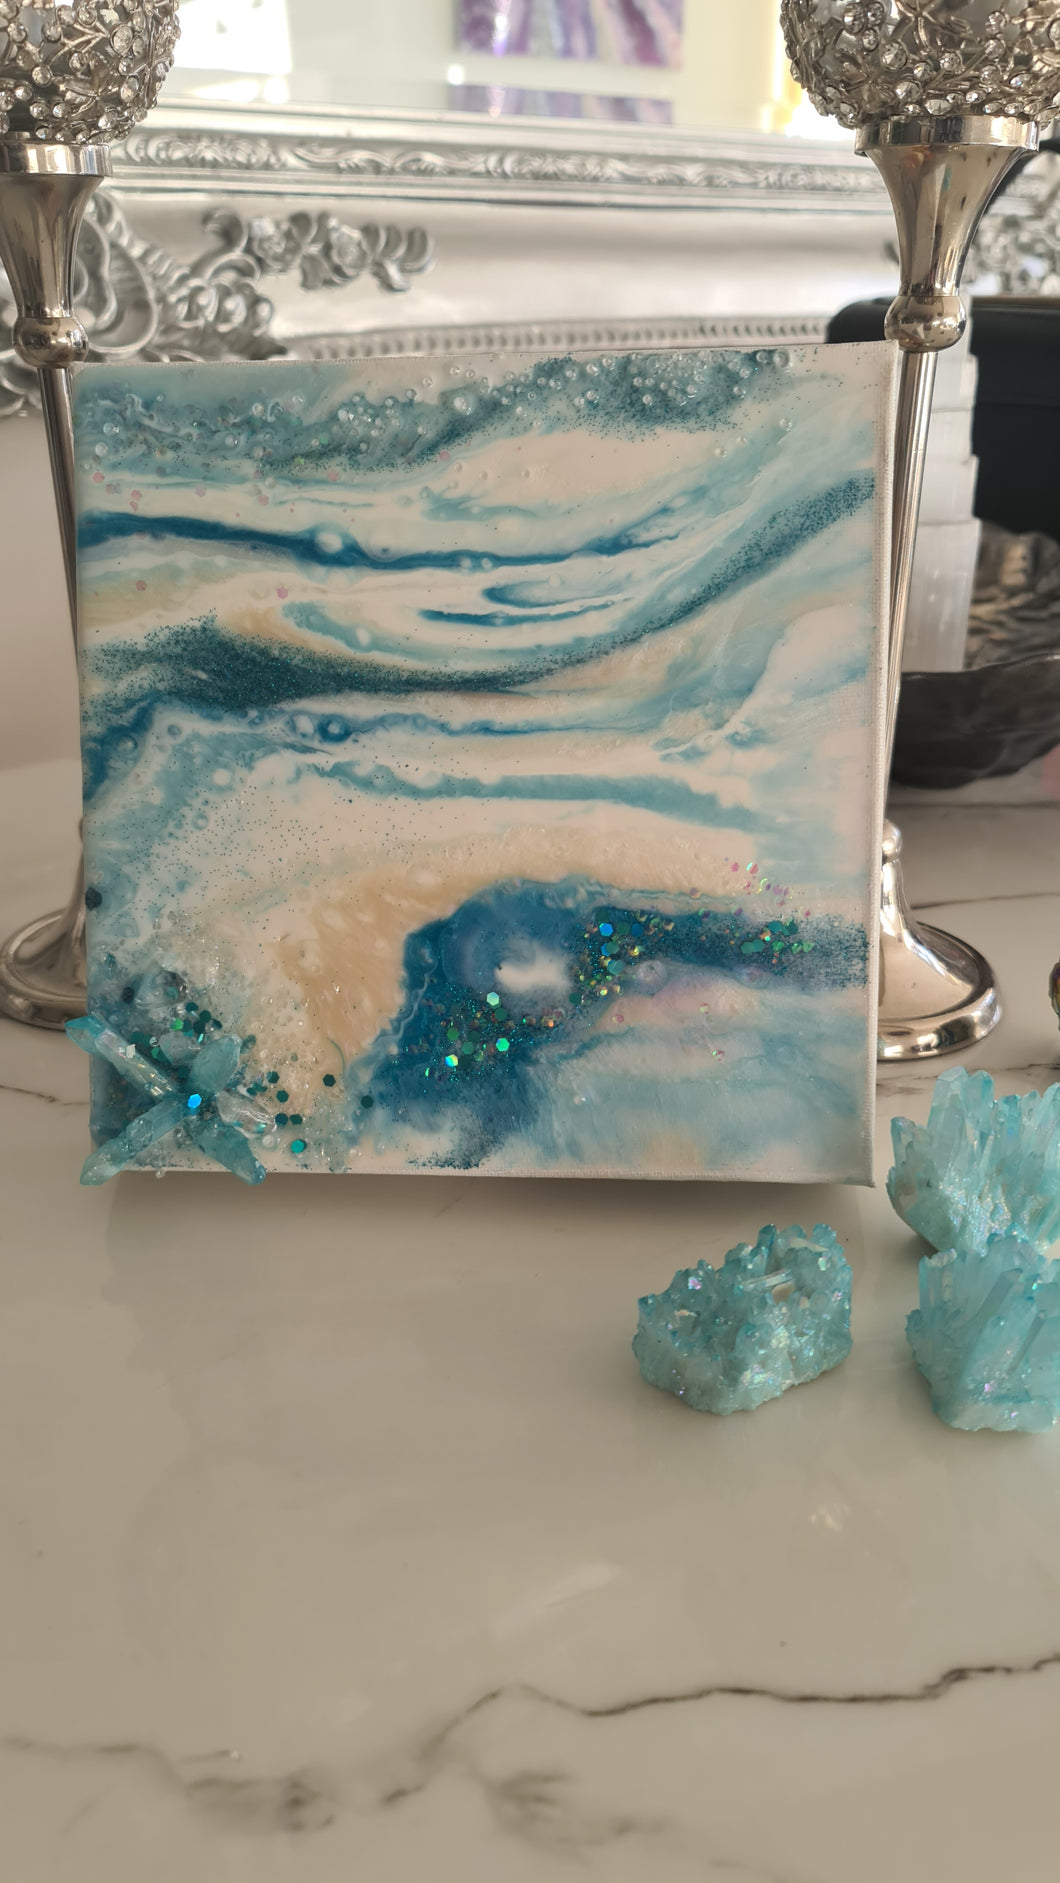 Aqua Serenity Resonance - Mini Geode Art   2/4 in series